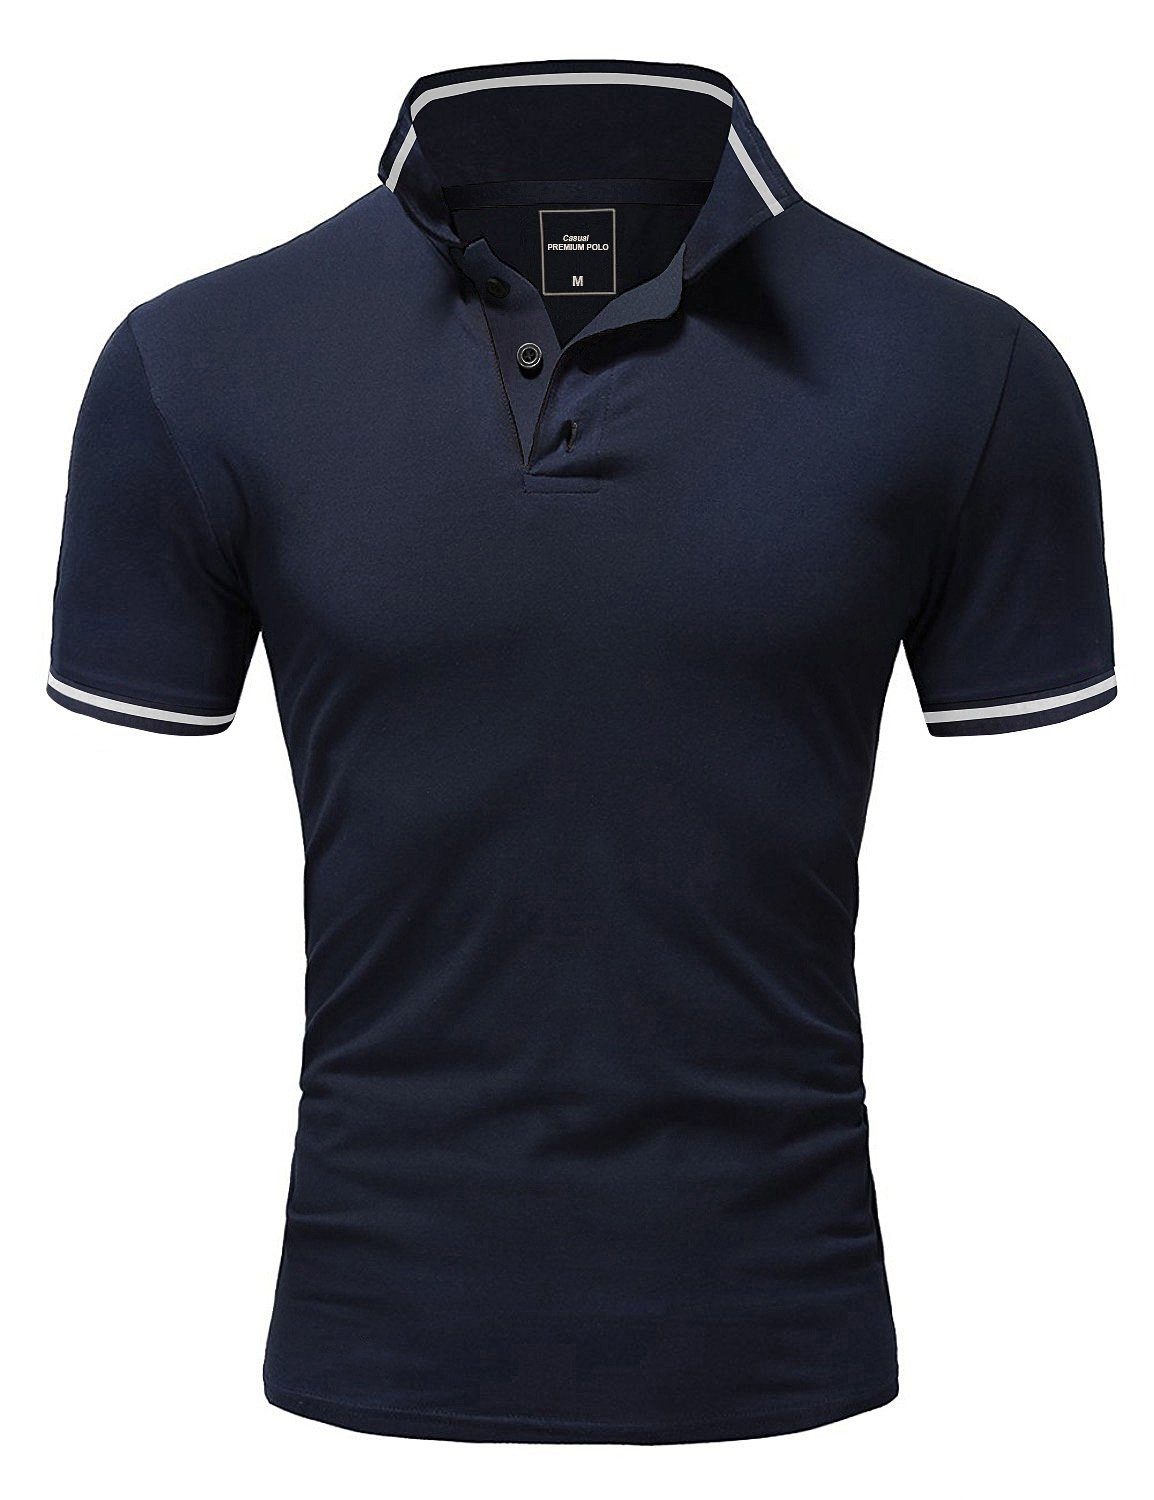 Kontrast Basic Herren Poloshirt Kurzarm Navyblau/Weiß Amaci&Sons Polohemd T-Shirt PROVIDENCE